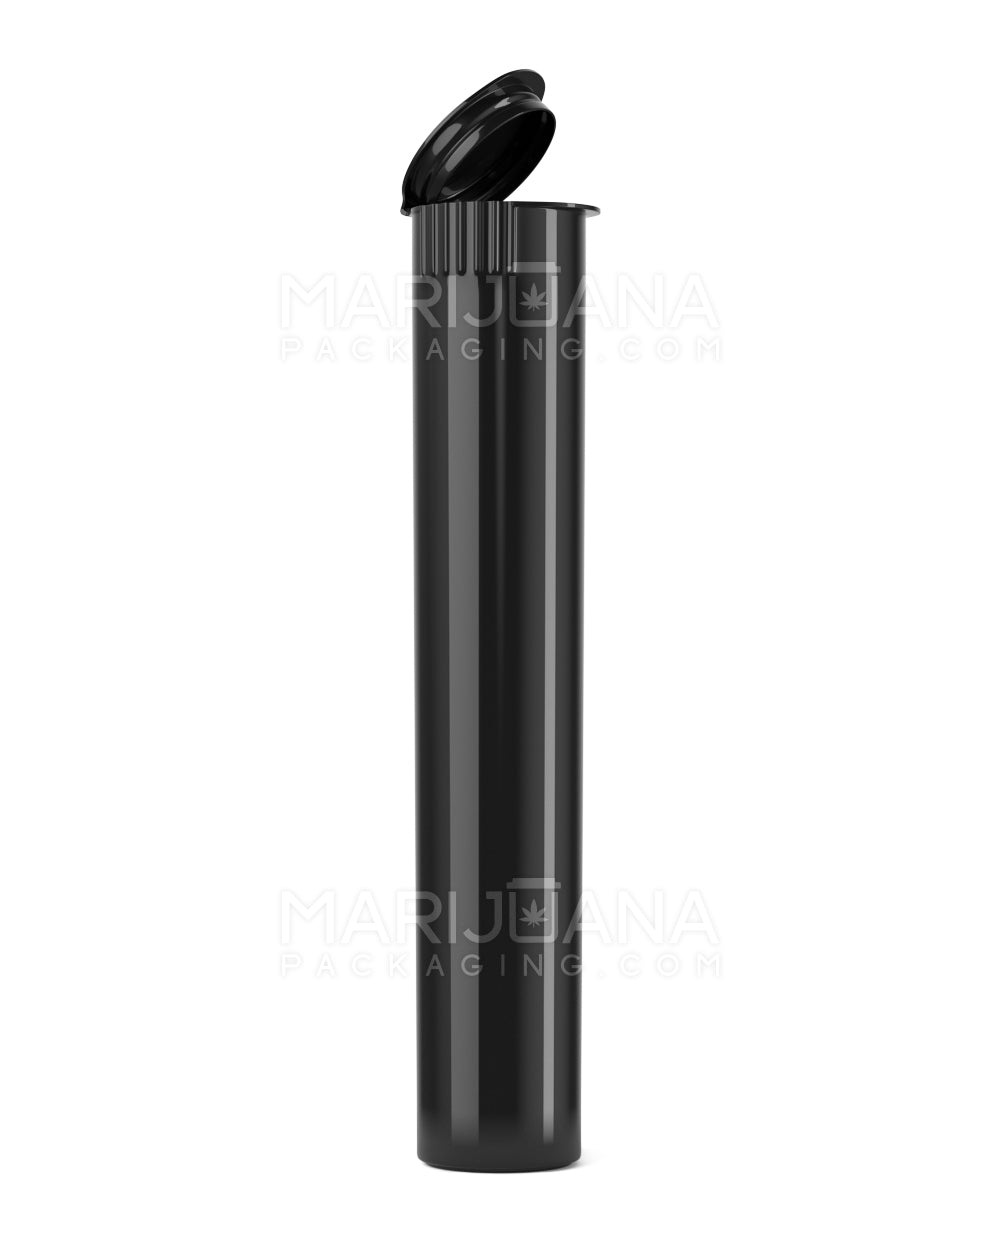 Child Resistant Pop Top Vape Cartridge Tube | 80mm - Black | Sample - 1